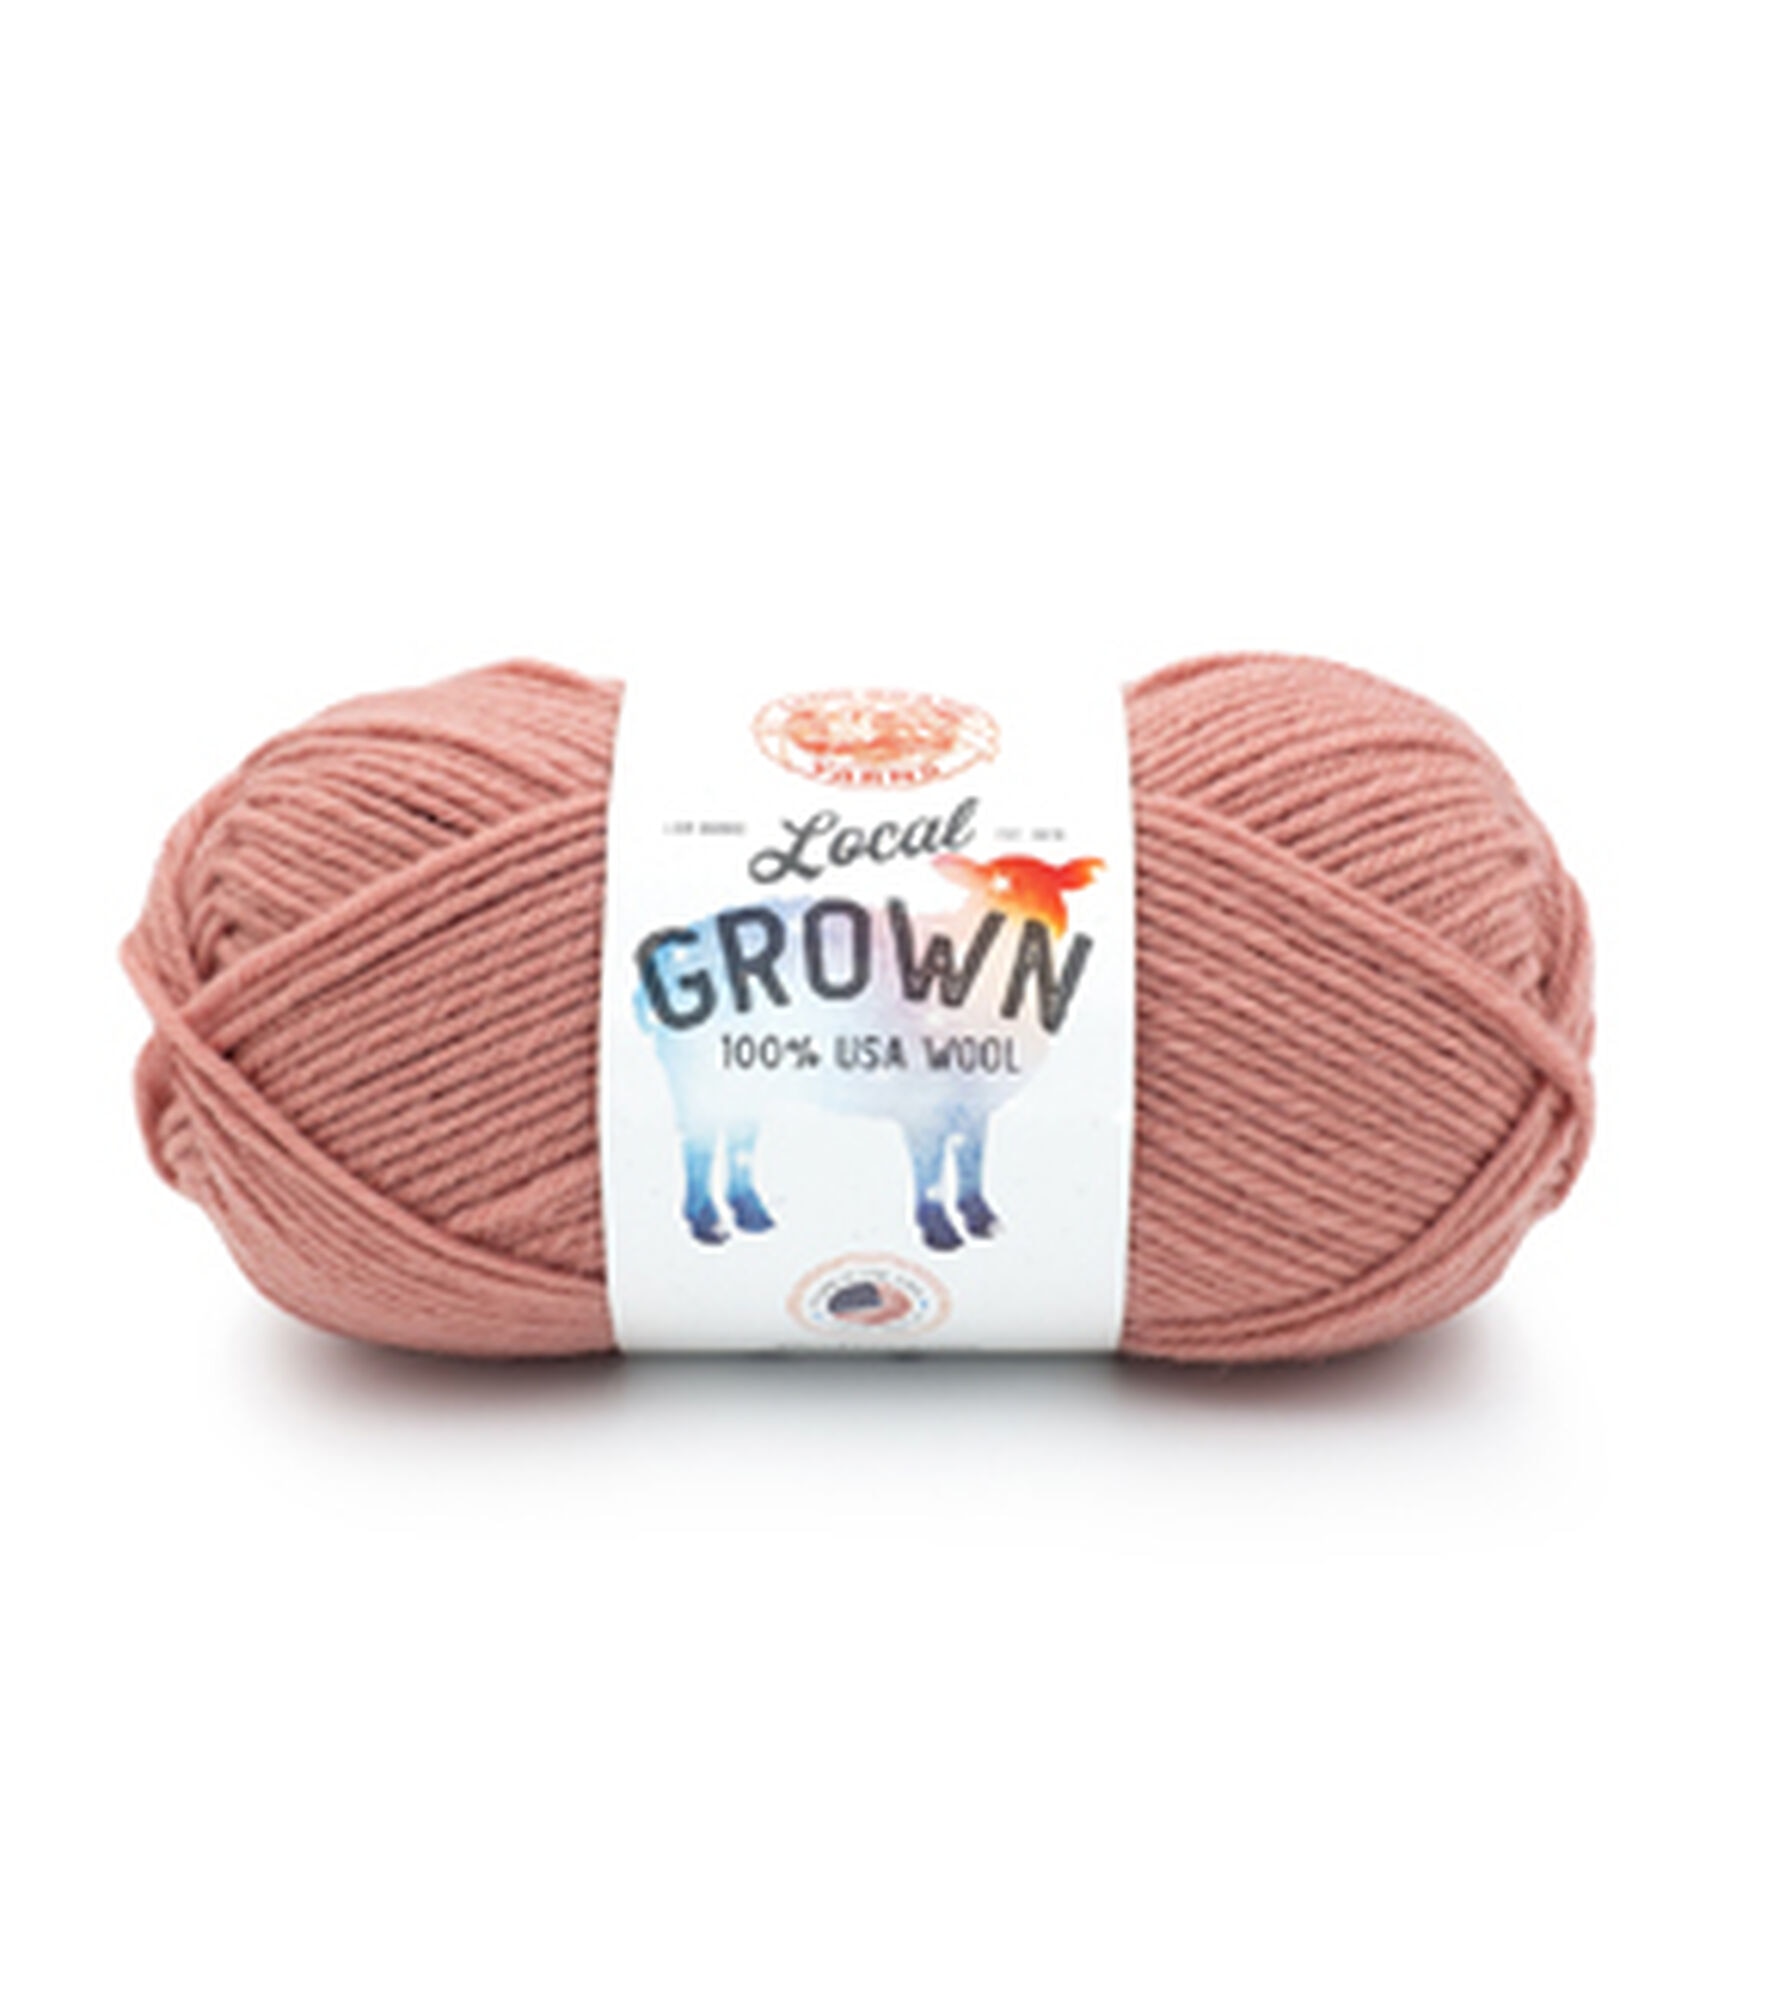 Lion Brand 'Nature's Choice' Strawberry Organic Cotton Yarn